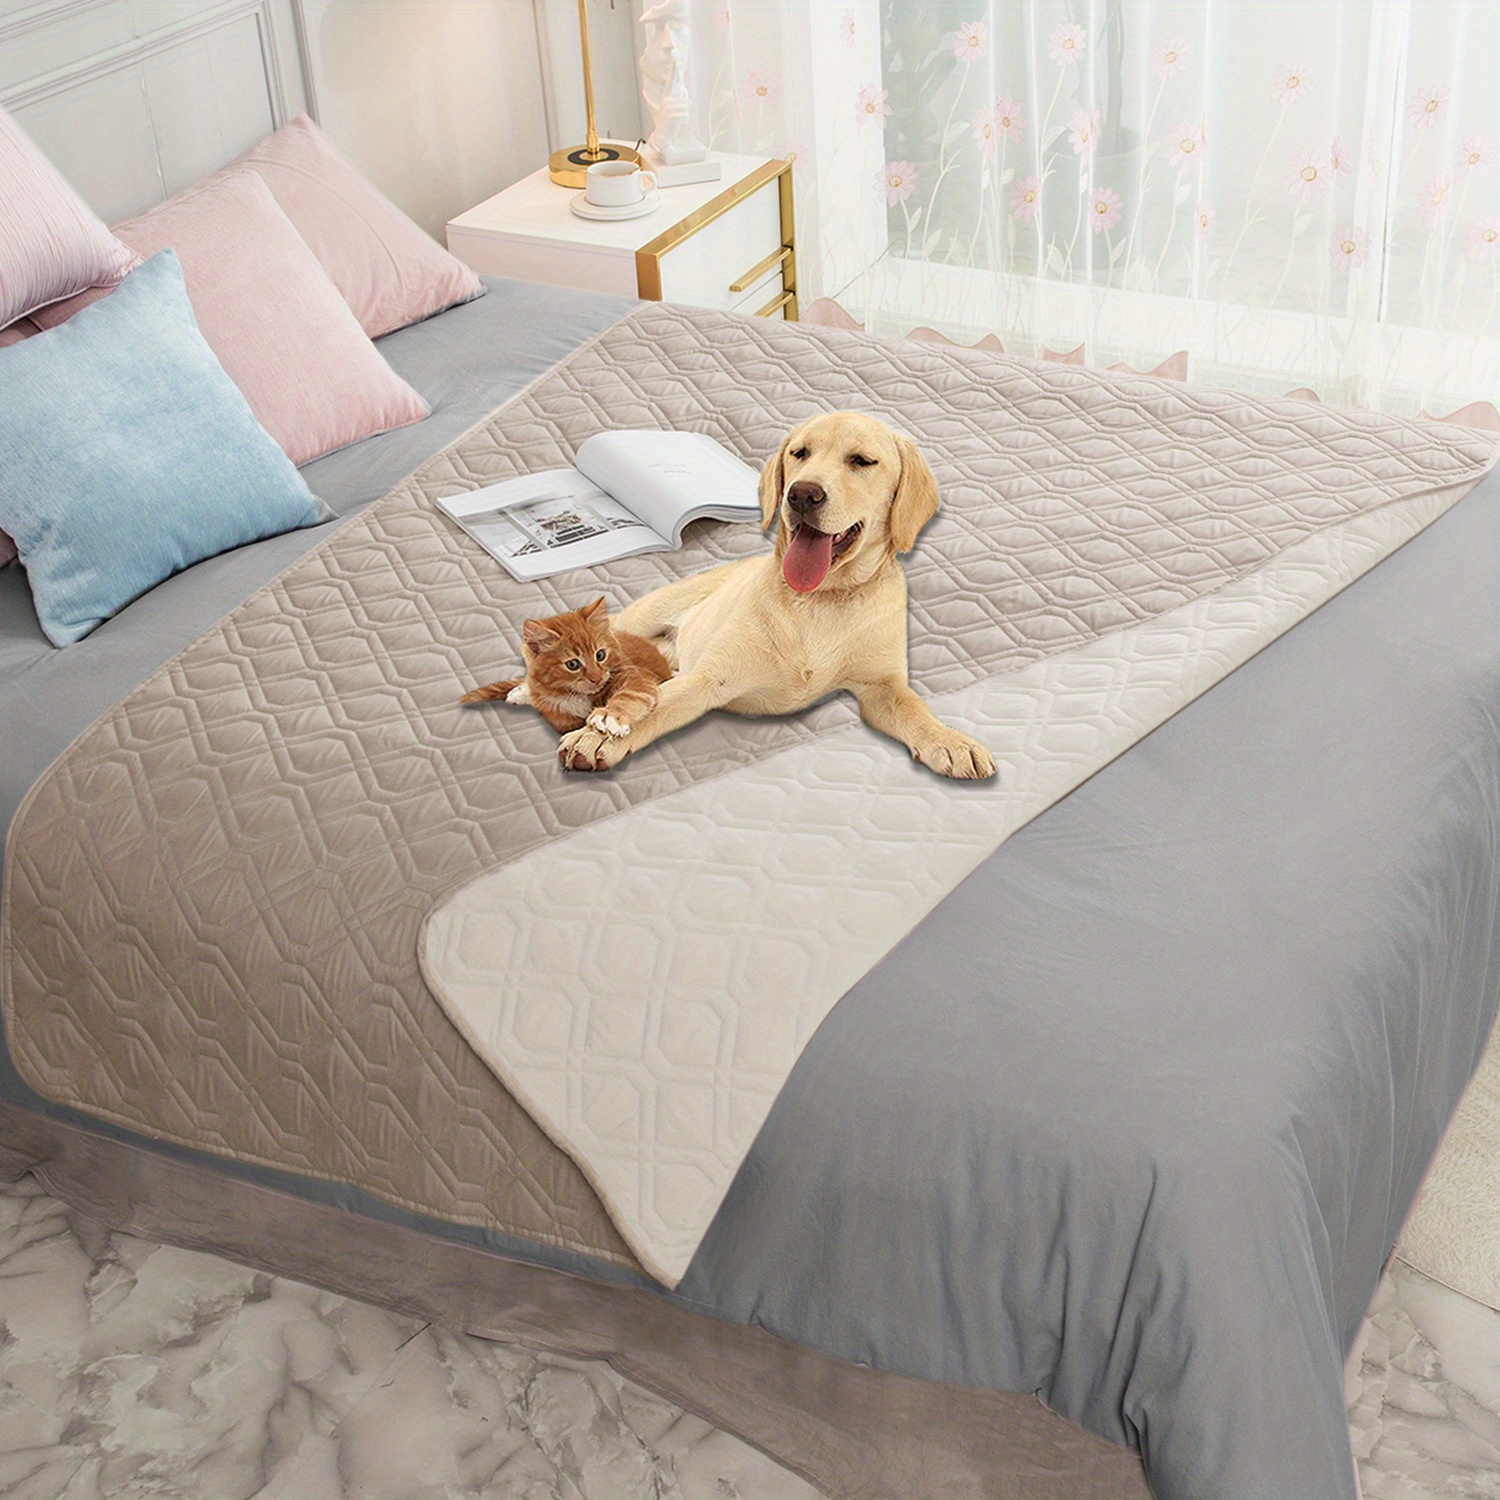 Bedsure Manta impermeable para cama – Manta impermeable de forro polar  Sherpa para perros grandes, mantas para mascotas para cama/sofá/jaula para